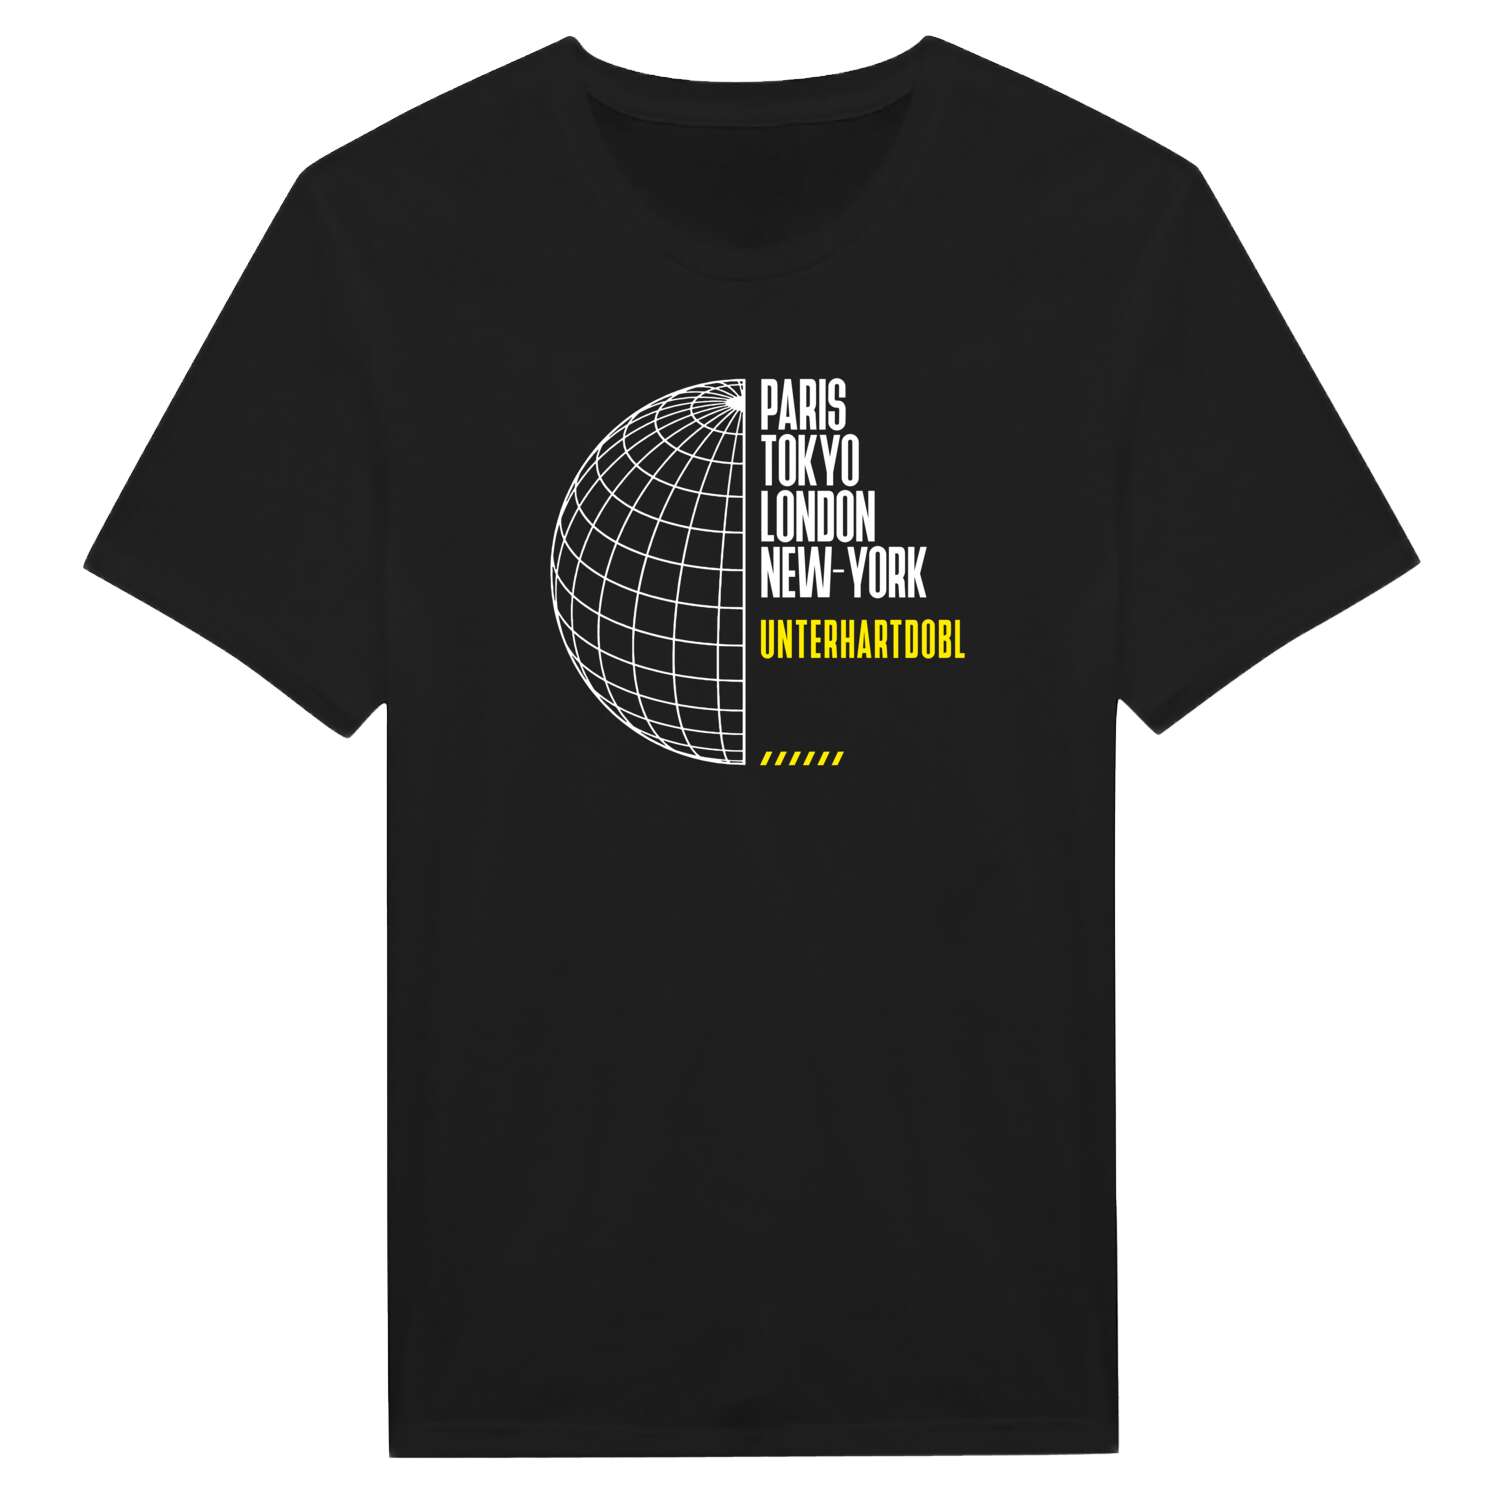 Unterhartdobl T-Shirt »Paris Tokyo London«